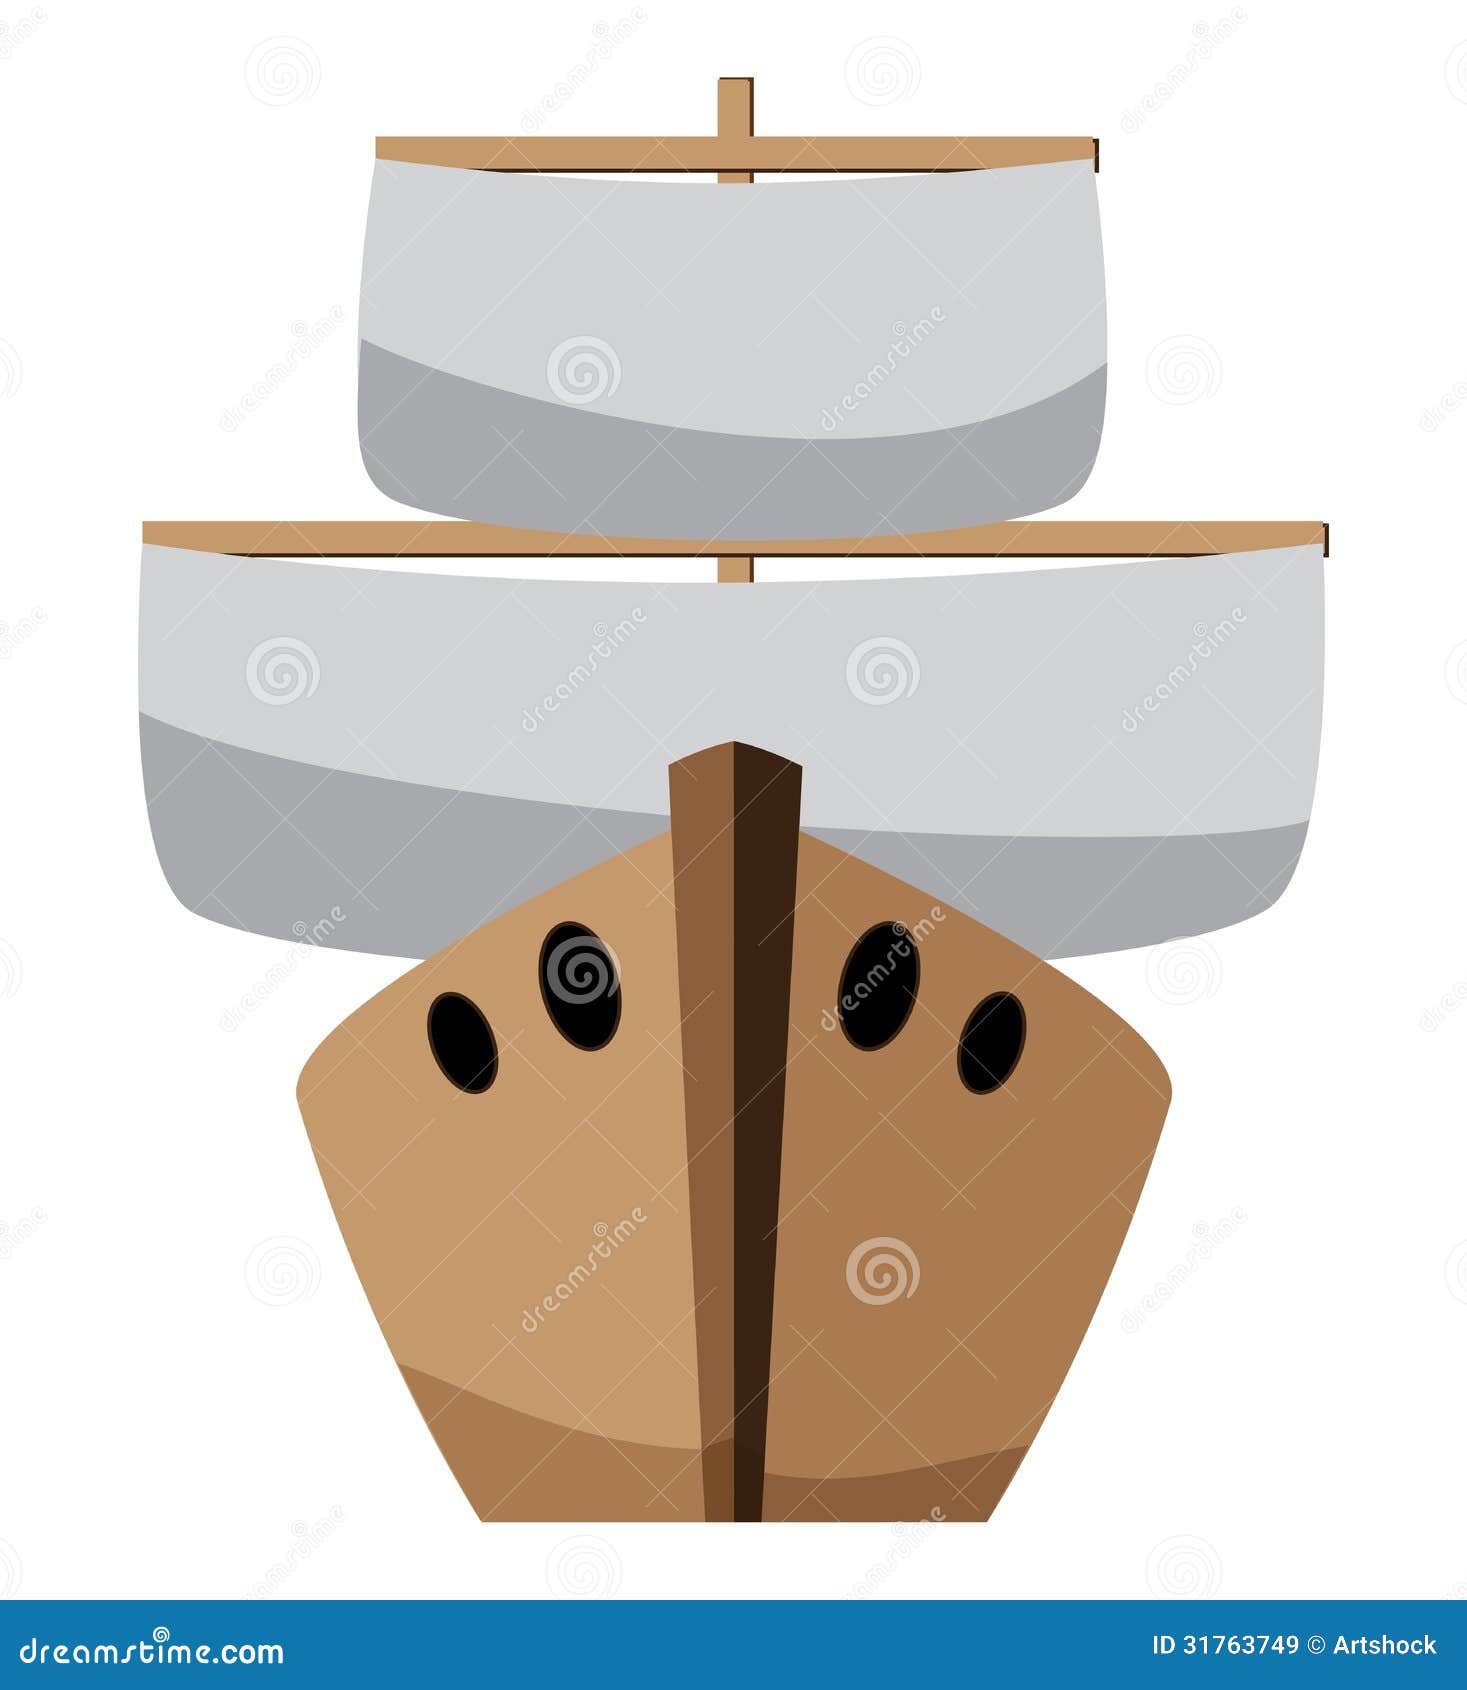 Cartoon Boat Royalty Free Stock Images - Image: 31763749